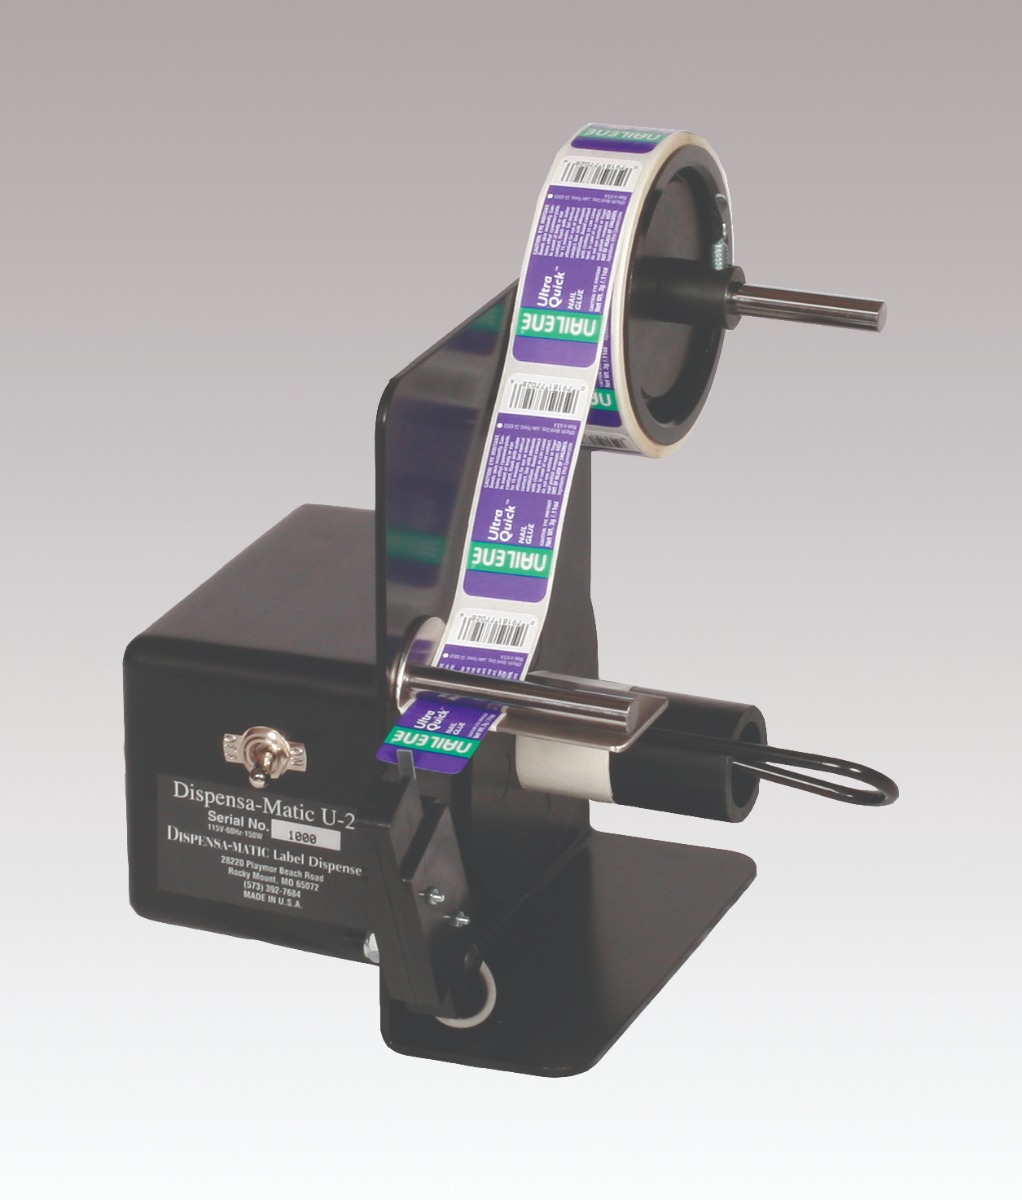 Dispensa-Matic U-25 Electric Dispenser (Physical Detector)